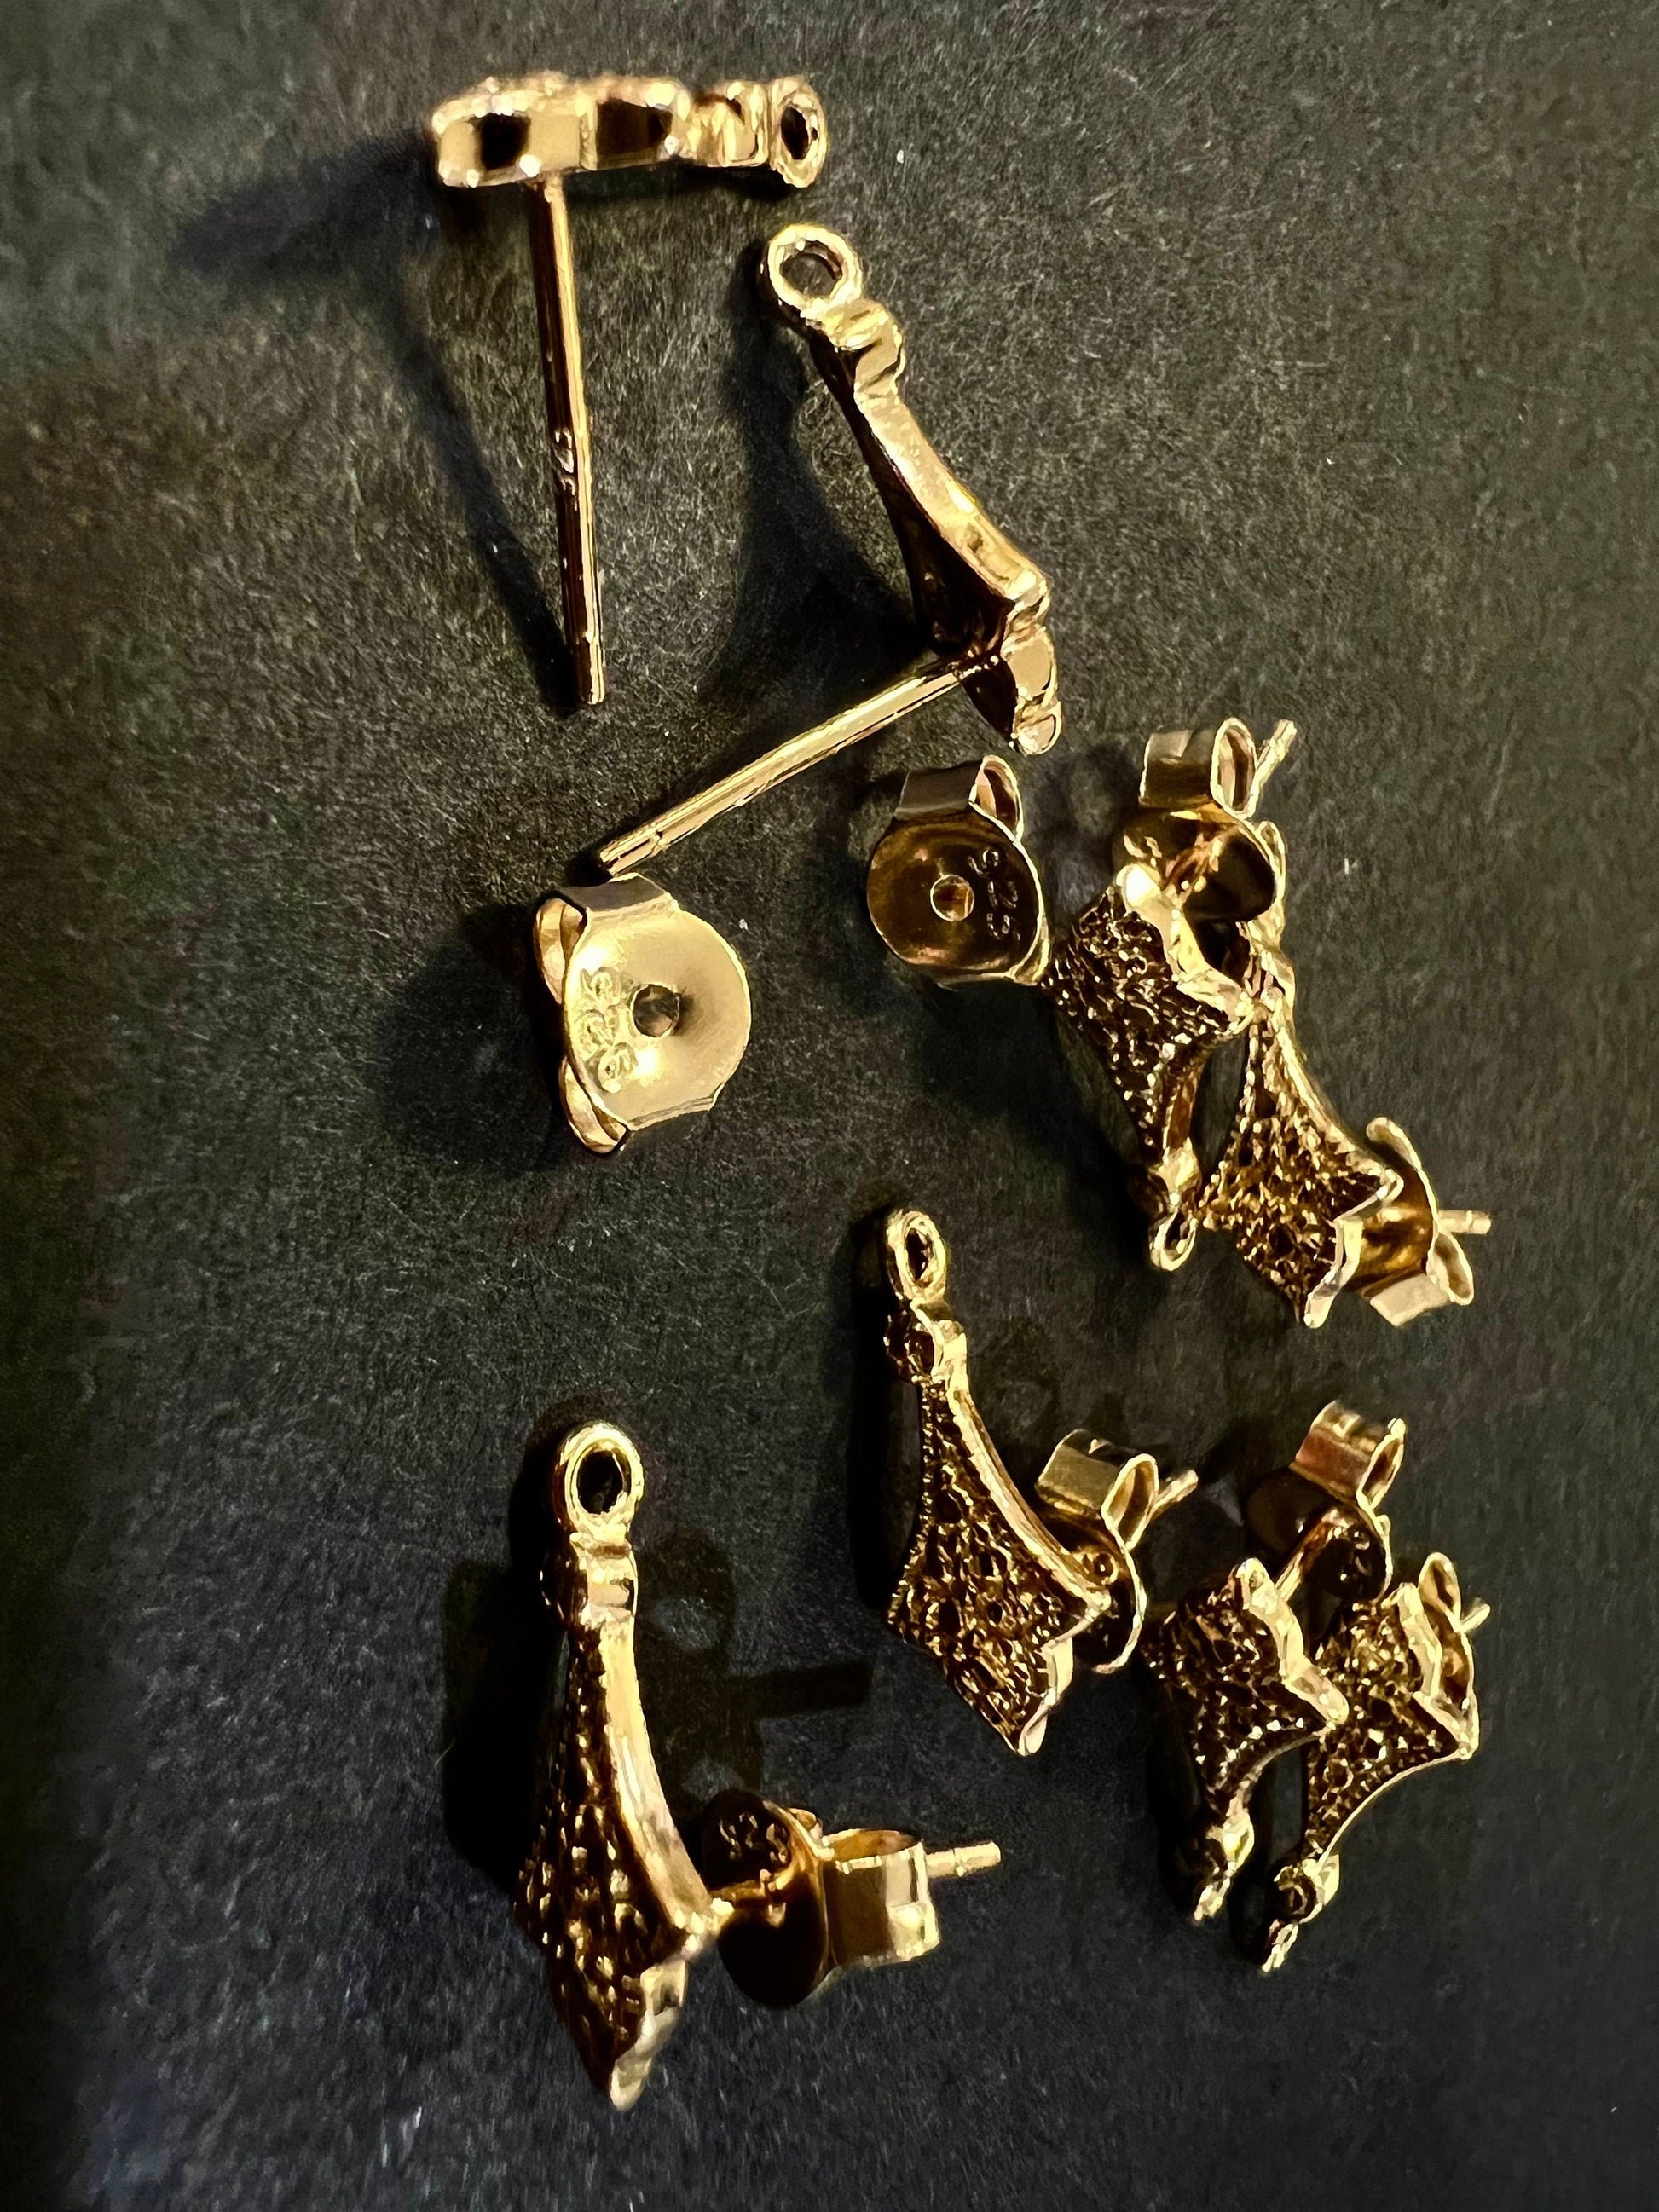 925 sterling silver and 18k gold vermeil fancy earring post findings,earrings making post.1pair 925 stamped